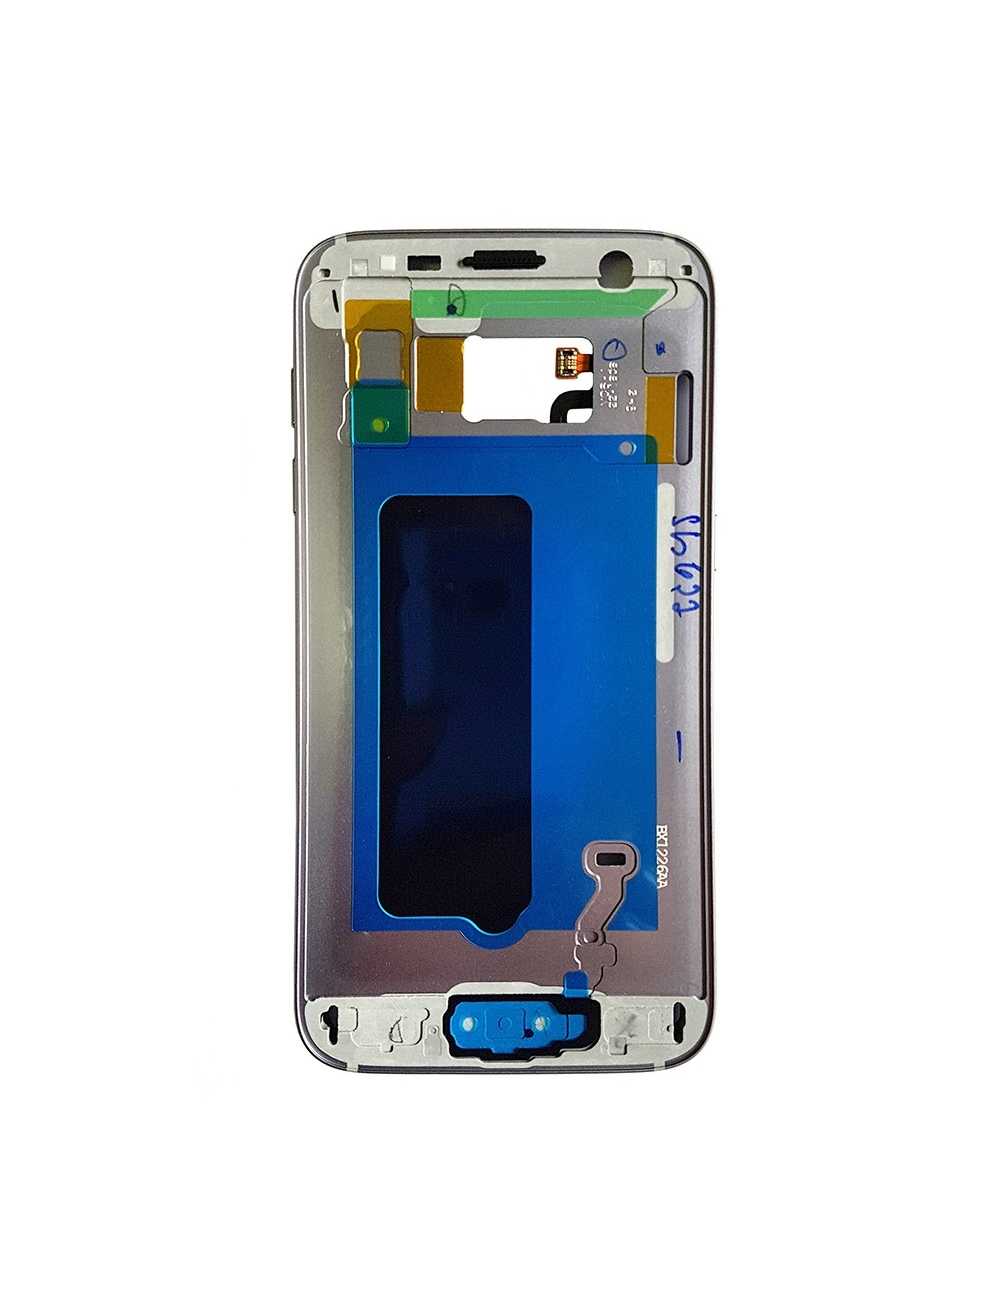 Carcasa intermedia Samsung Galaxy S7 plata (original con uso)